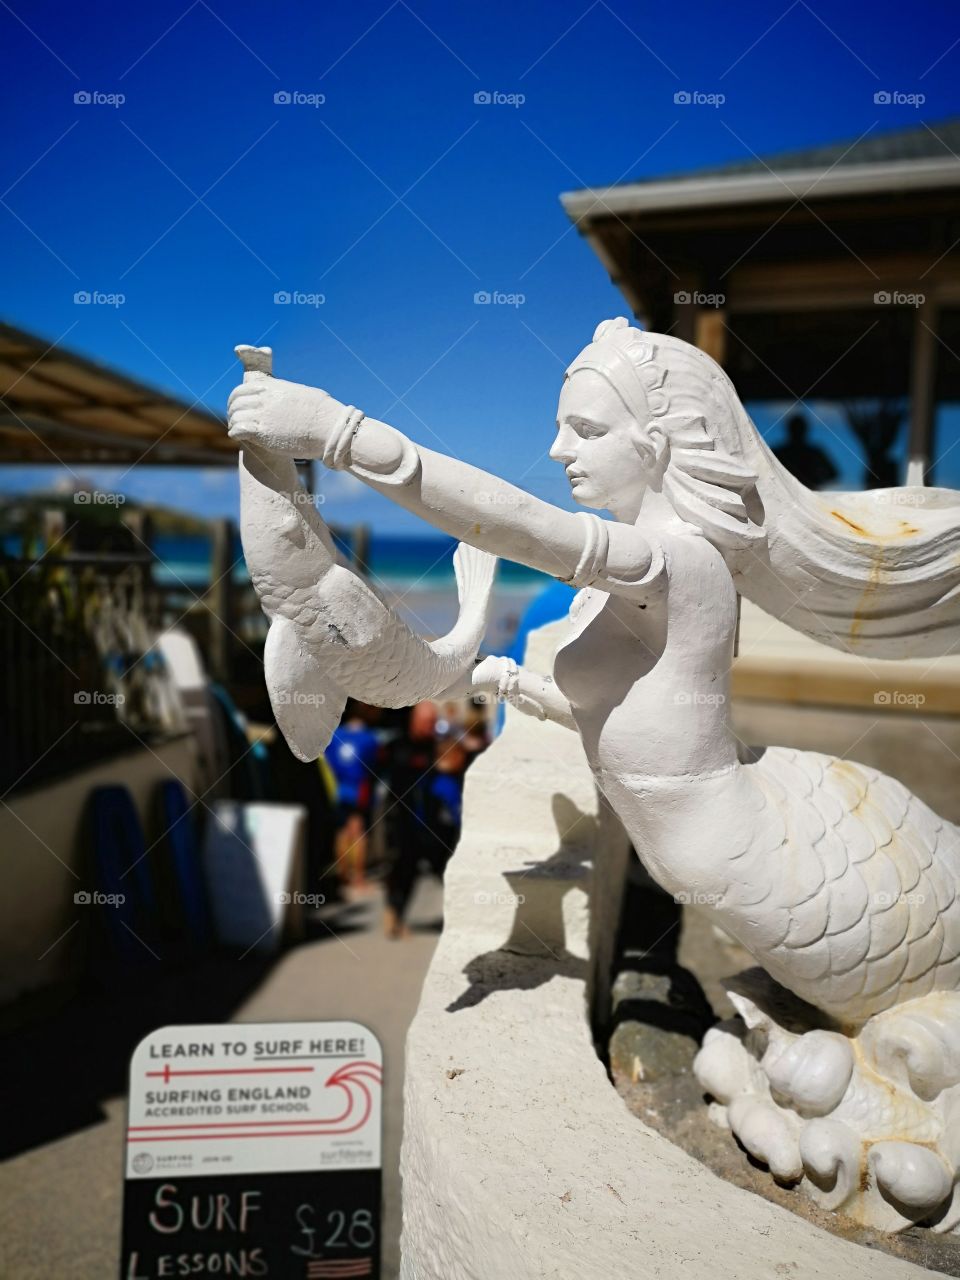 A mermaid statue in Cornwall